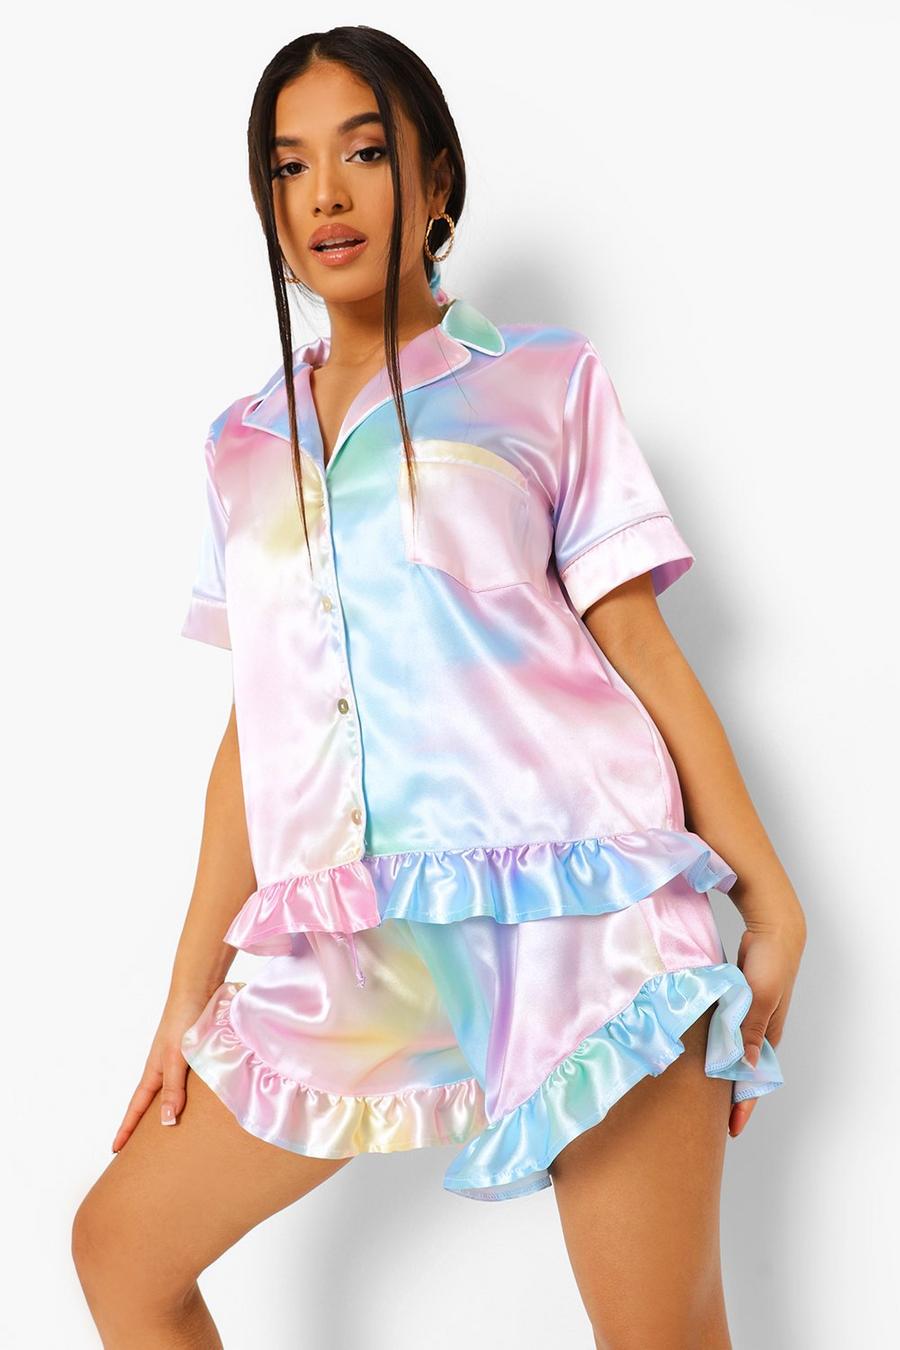 Set pigiama color pastello con pantaloncini e balze Petite, Multi image number 1